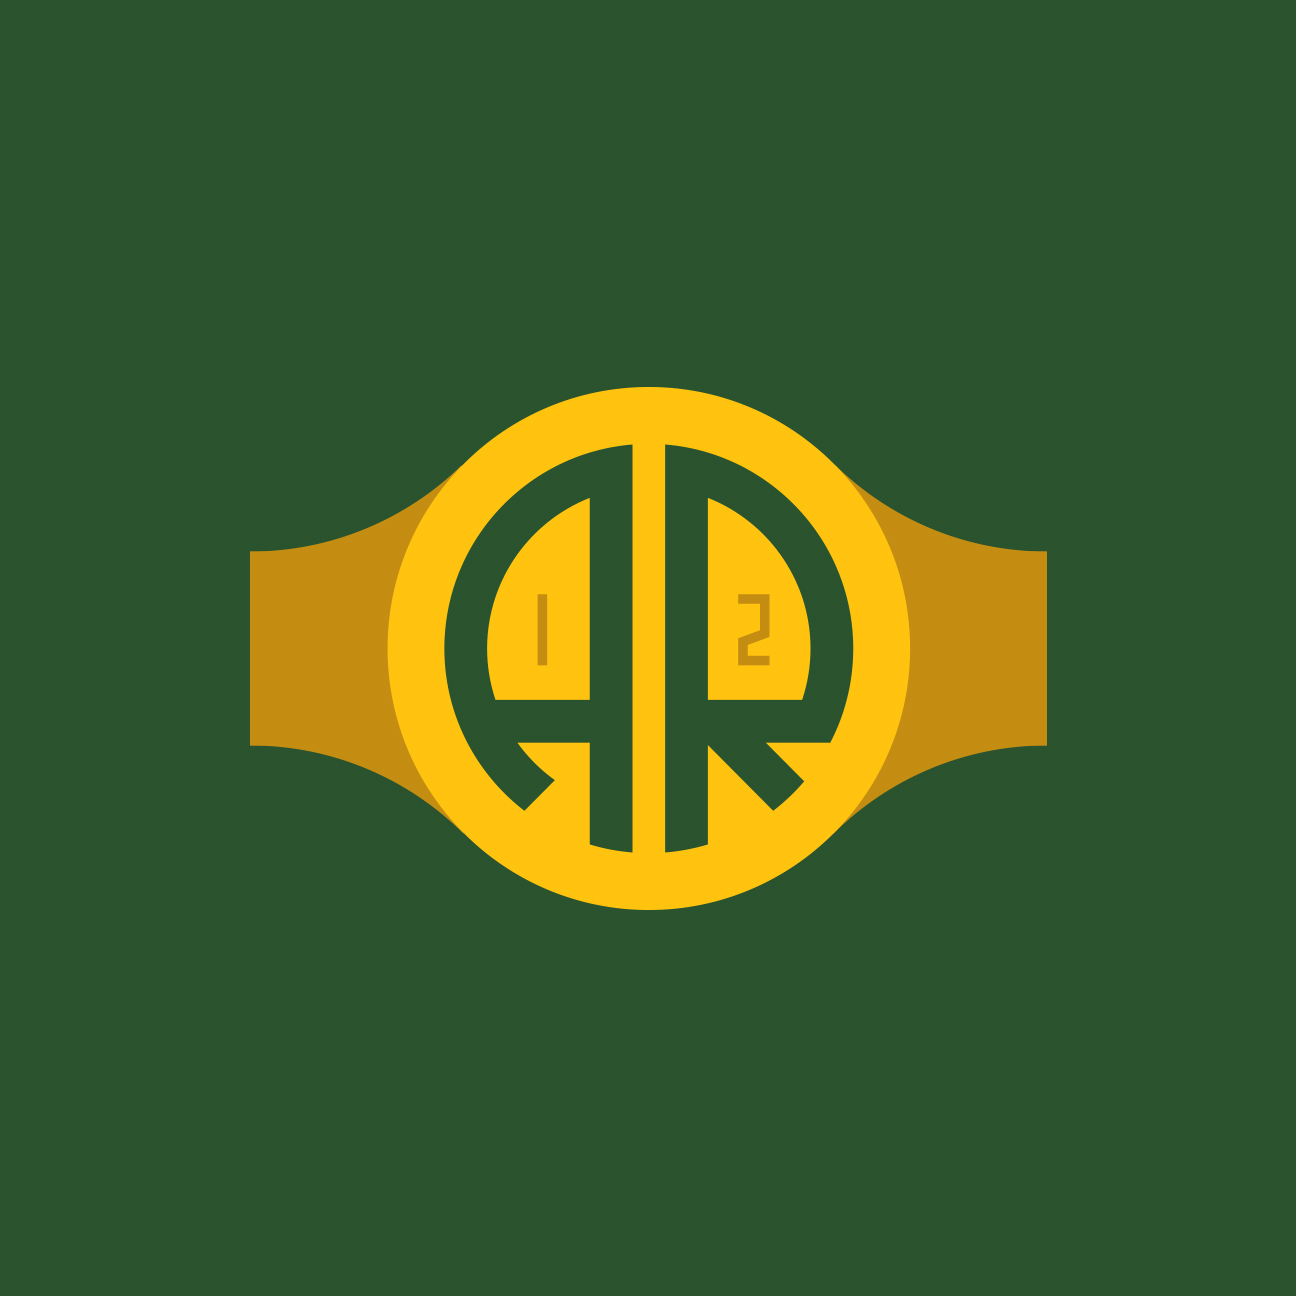 Green and Yellow Football Logo - New logos for 10 NFL stars - Tom Brady, Rob Gronkowski of New